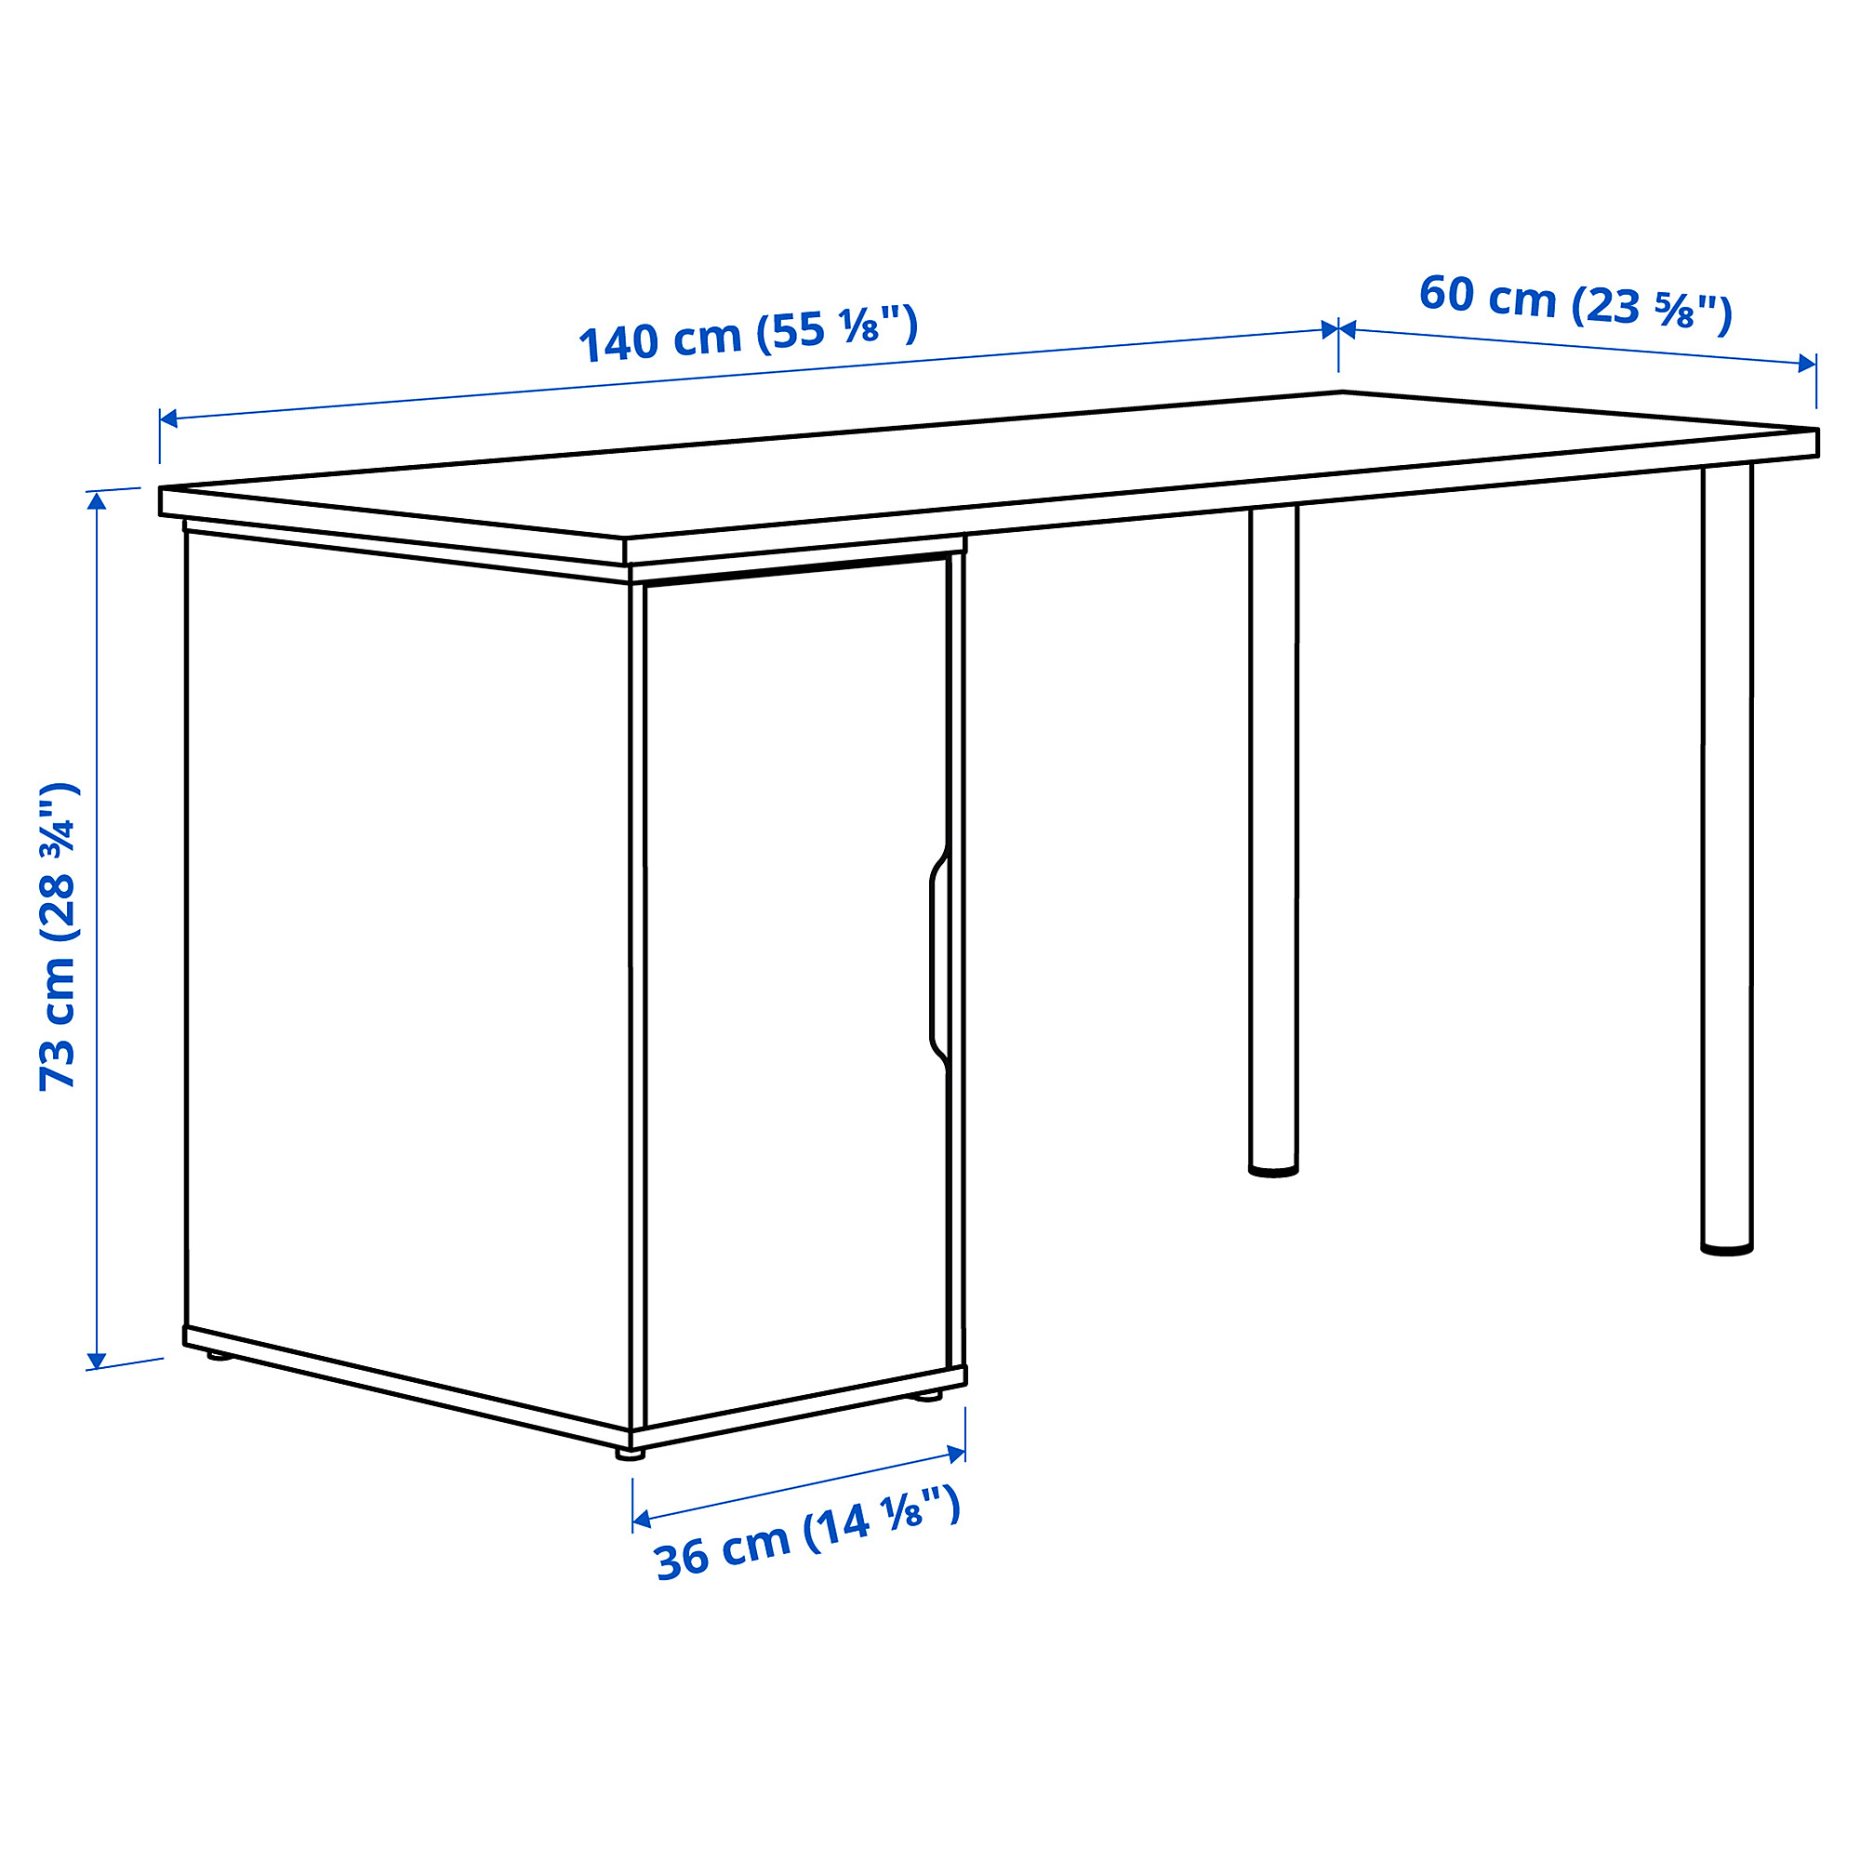 LAGKAPTEN/ALEX, desk, 140x60 cm, 595.216.11